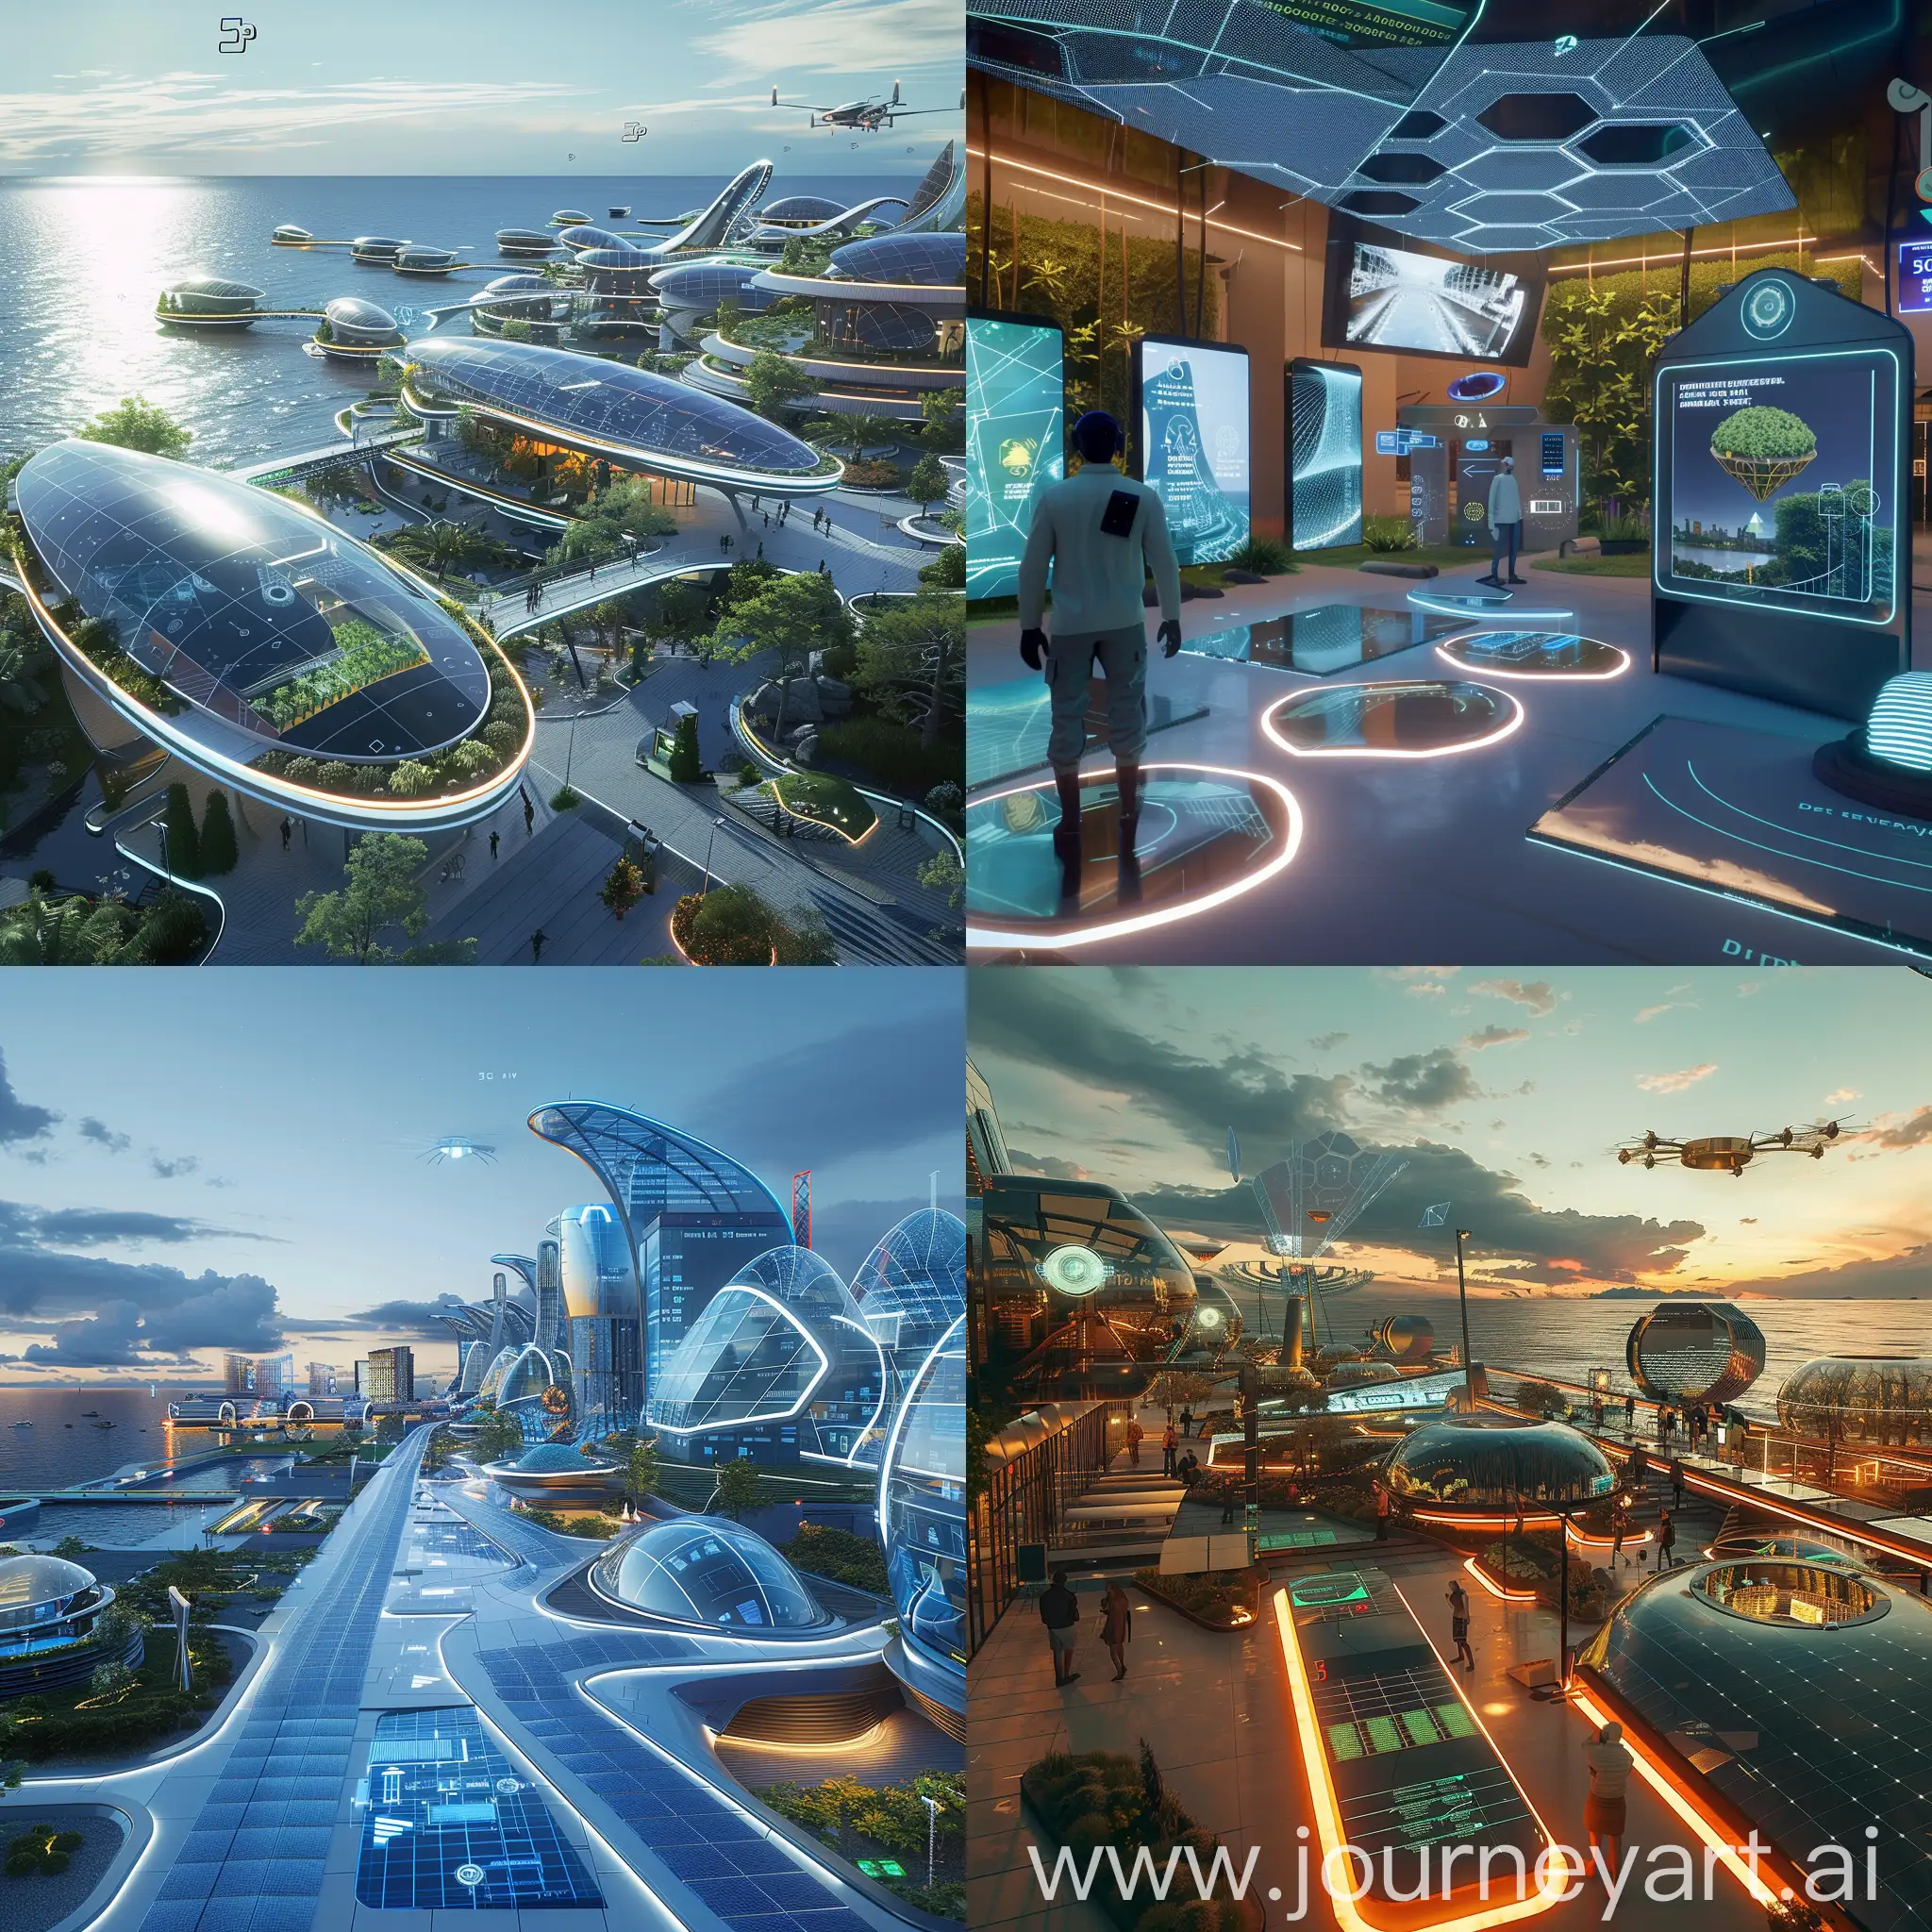 Futuristic-Vladivostok-Advanced-Information-Age-Innovations-and-Sustainable-Urban-Development